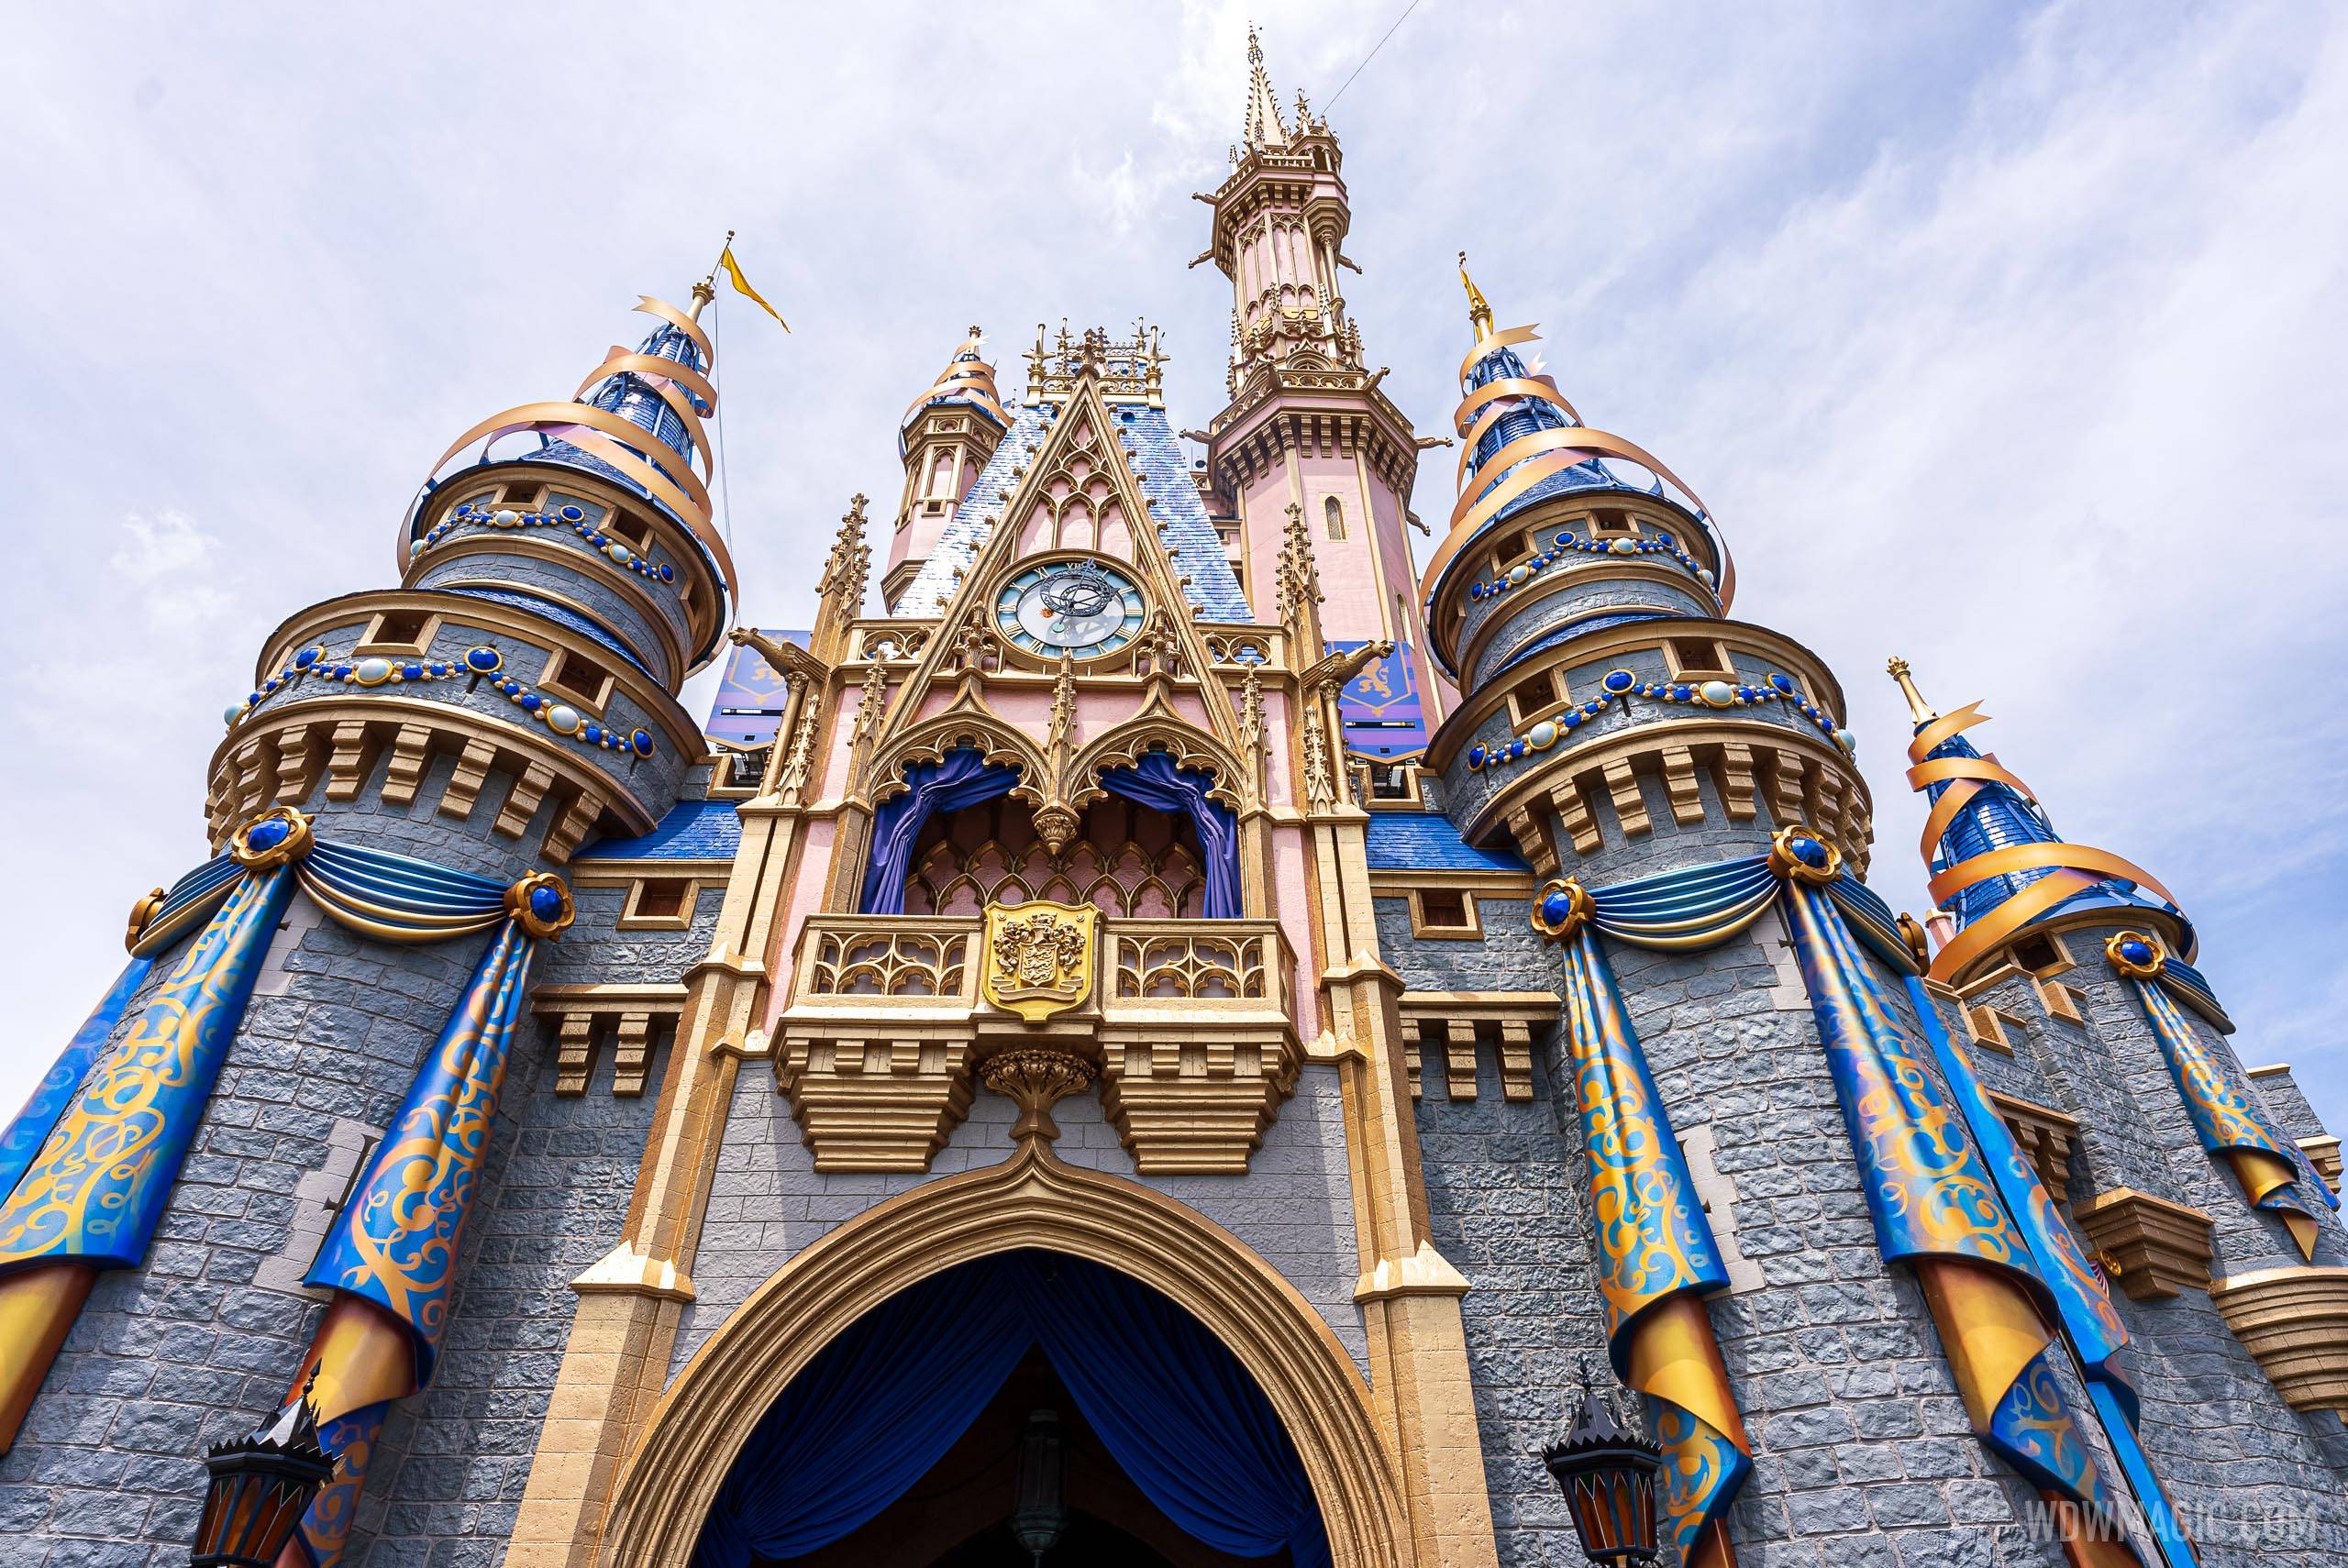 Walt Disney World will begin its 50th celebrations on October 1 2021